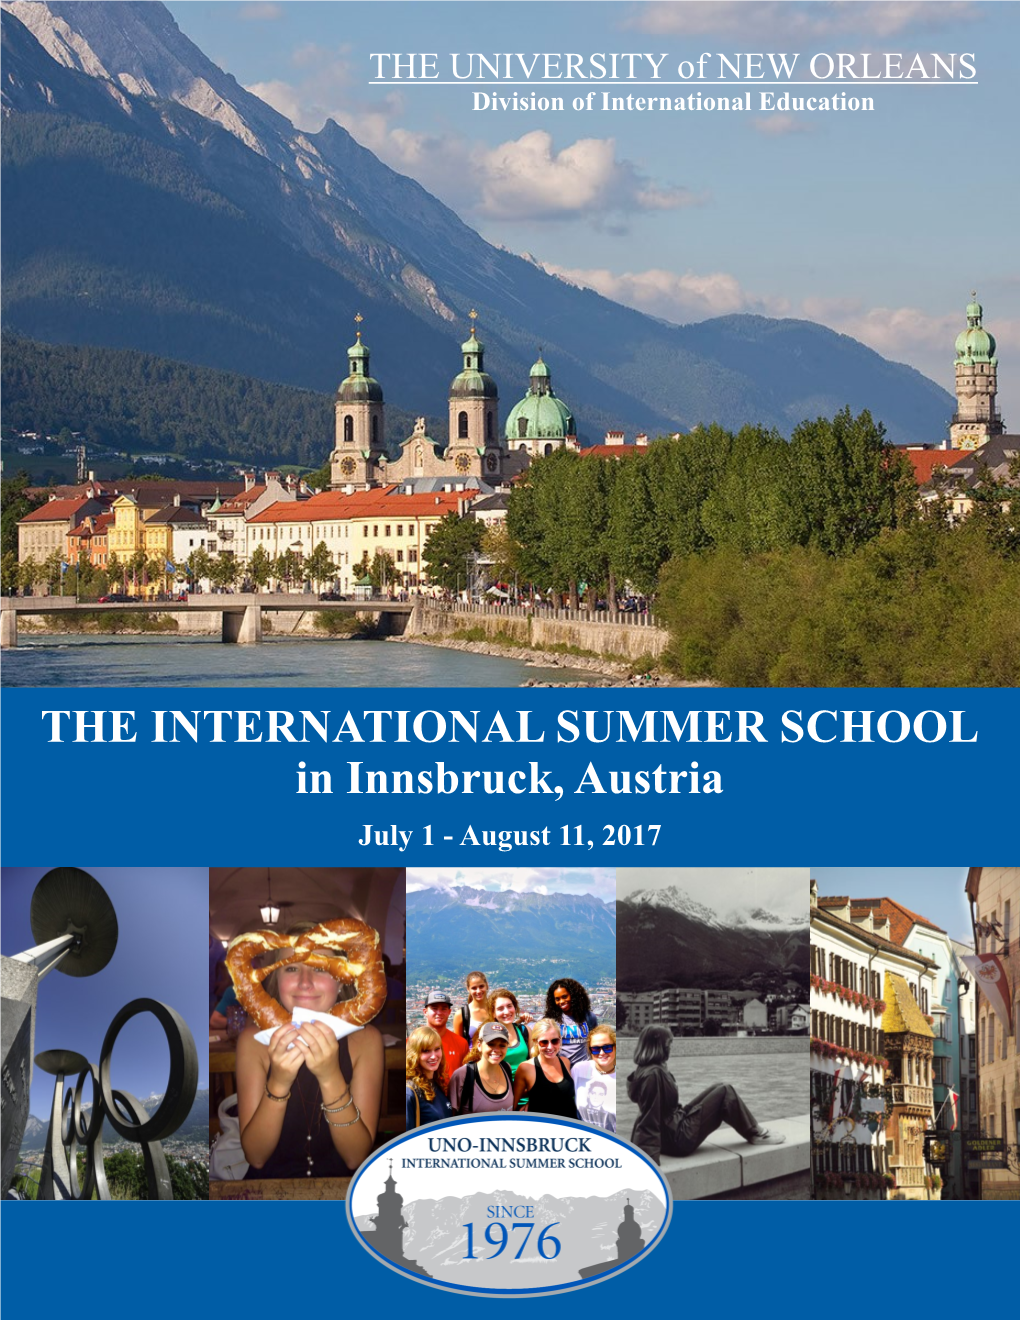 THE INTERNATIONAL SUMMER SCHOOL in Innsbruck, Austria